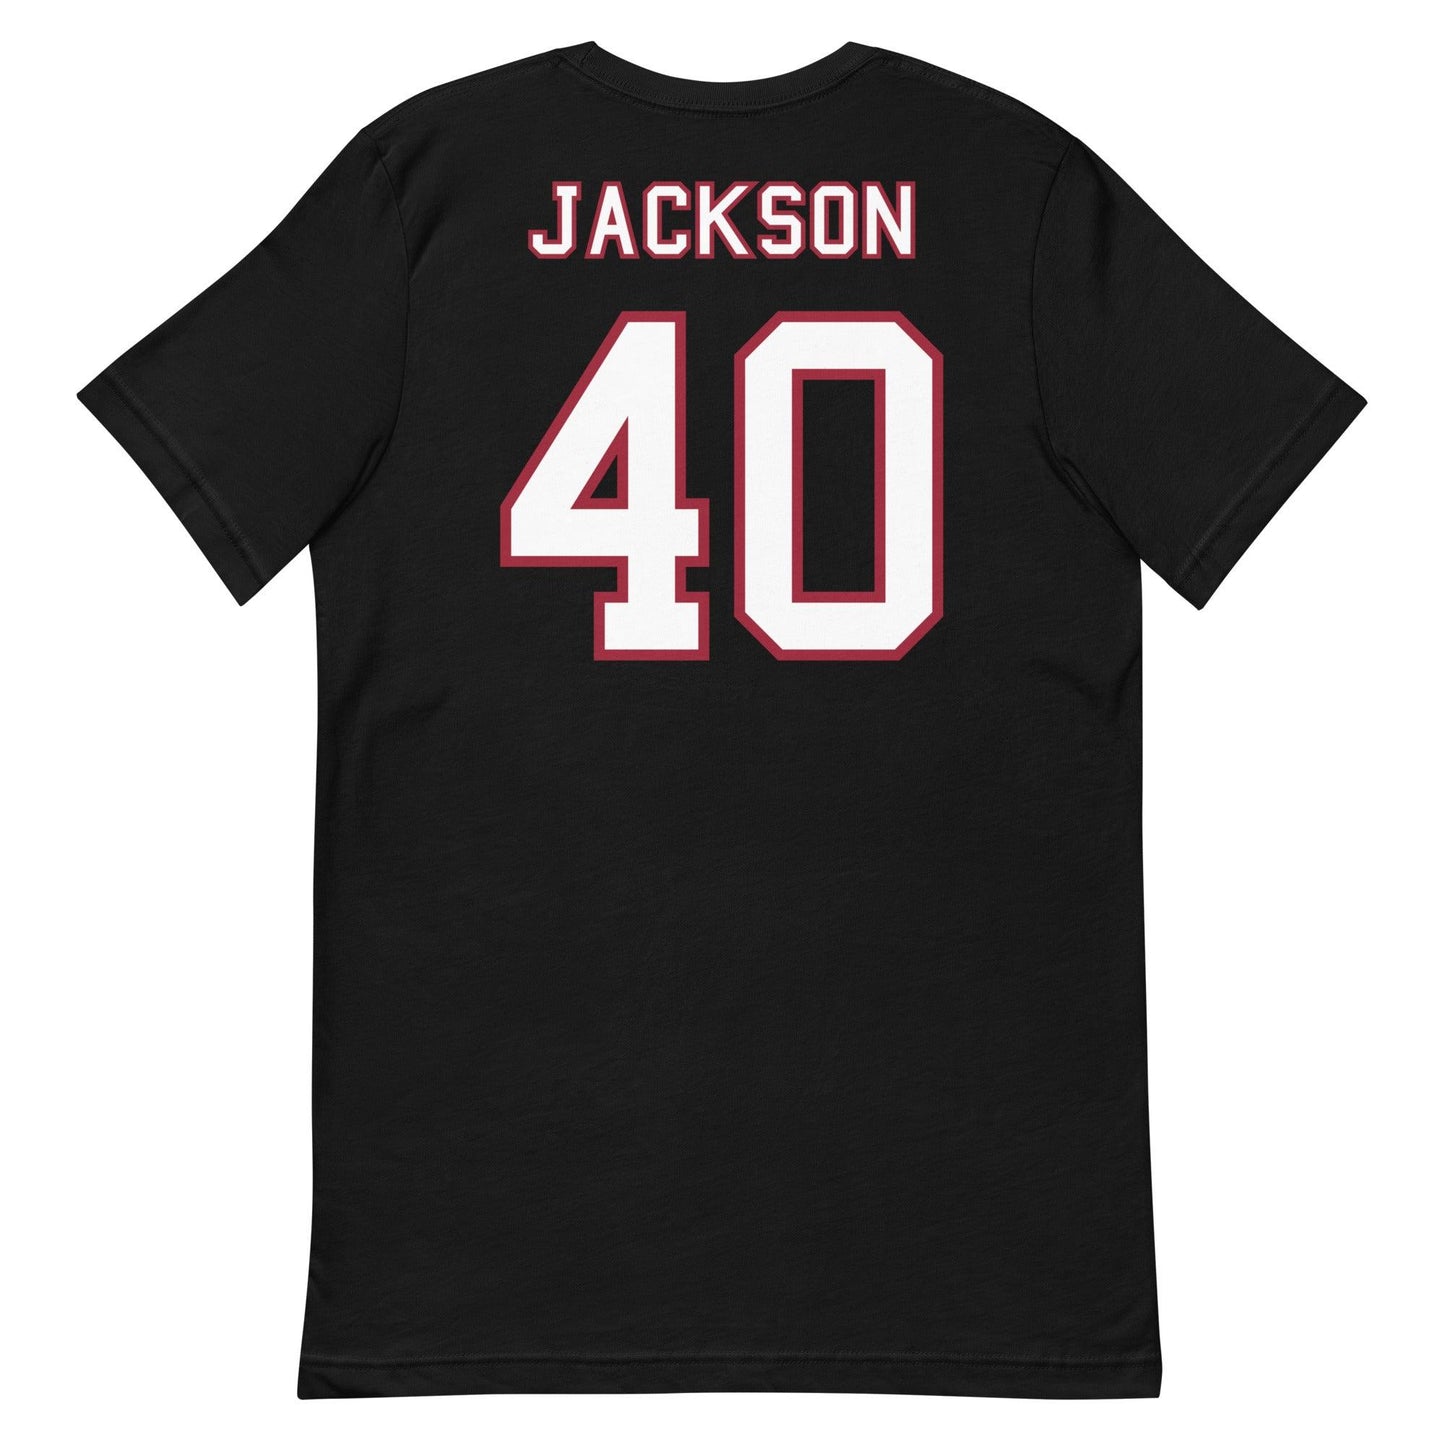 Landon Jackson "Jersey" t-shirt - Fan Arch